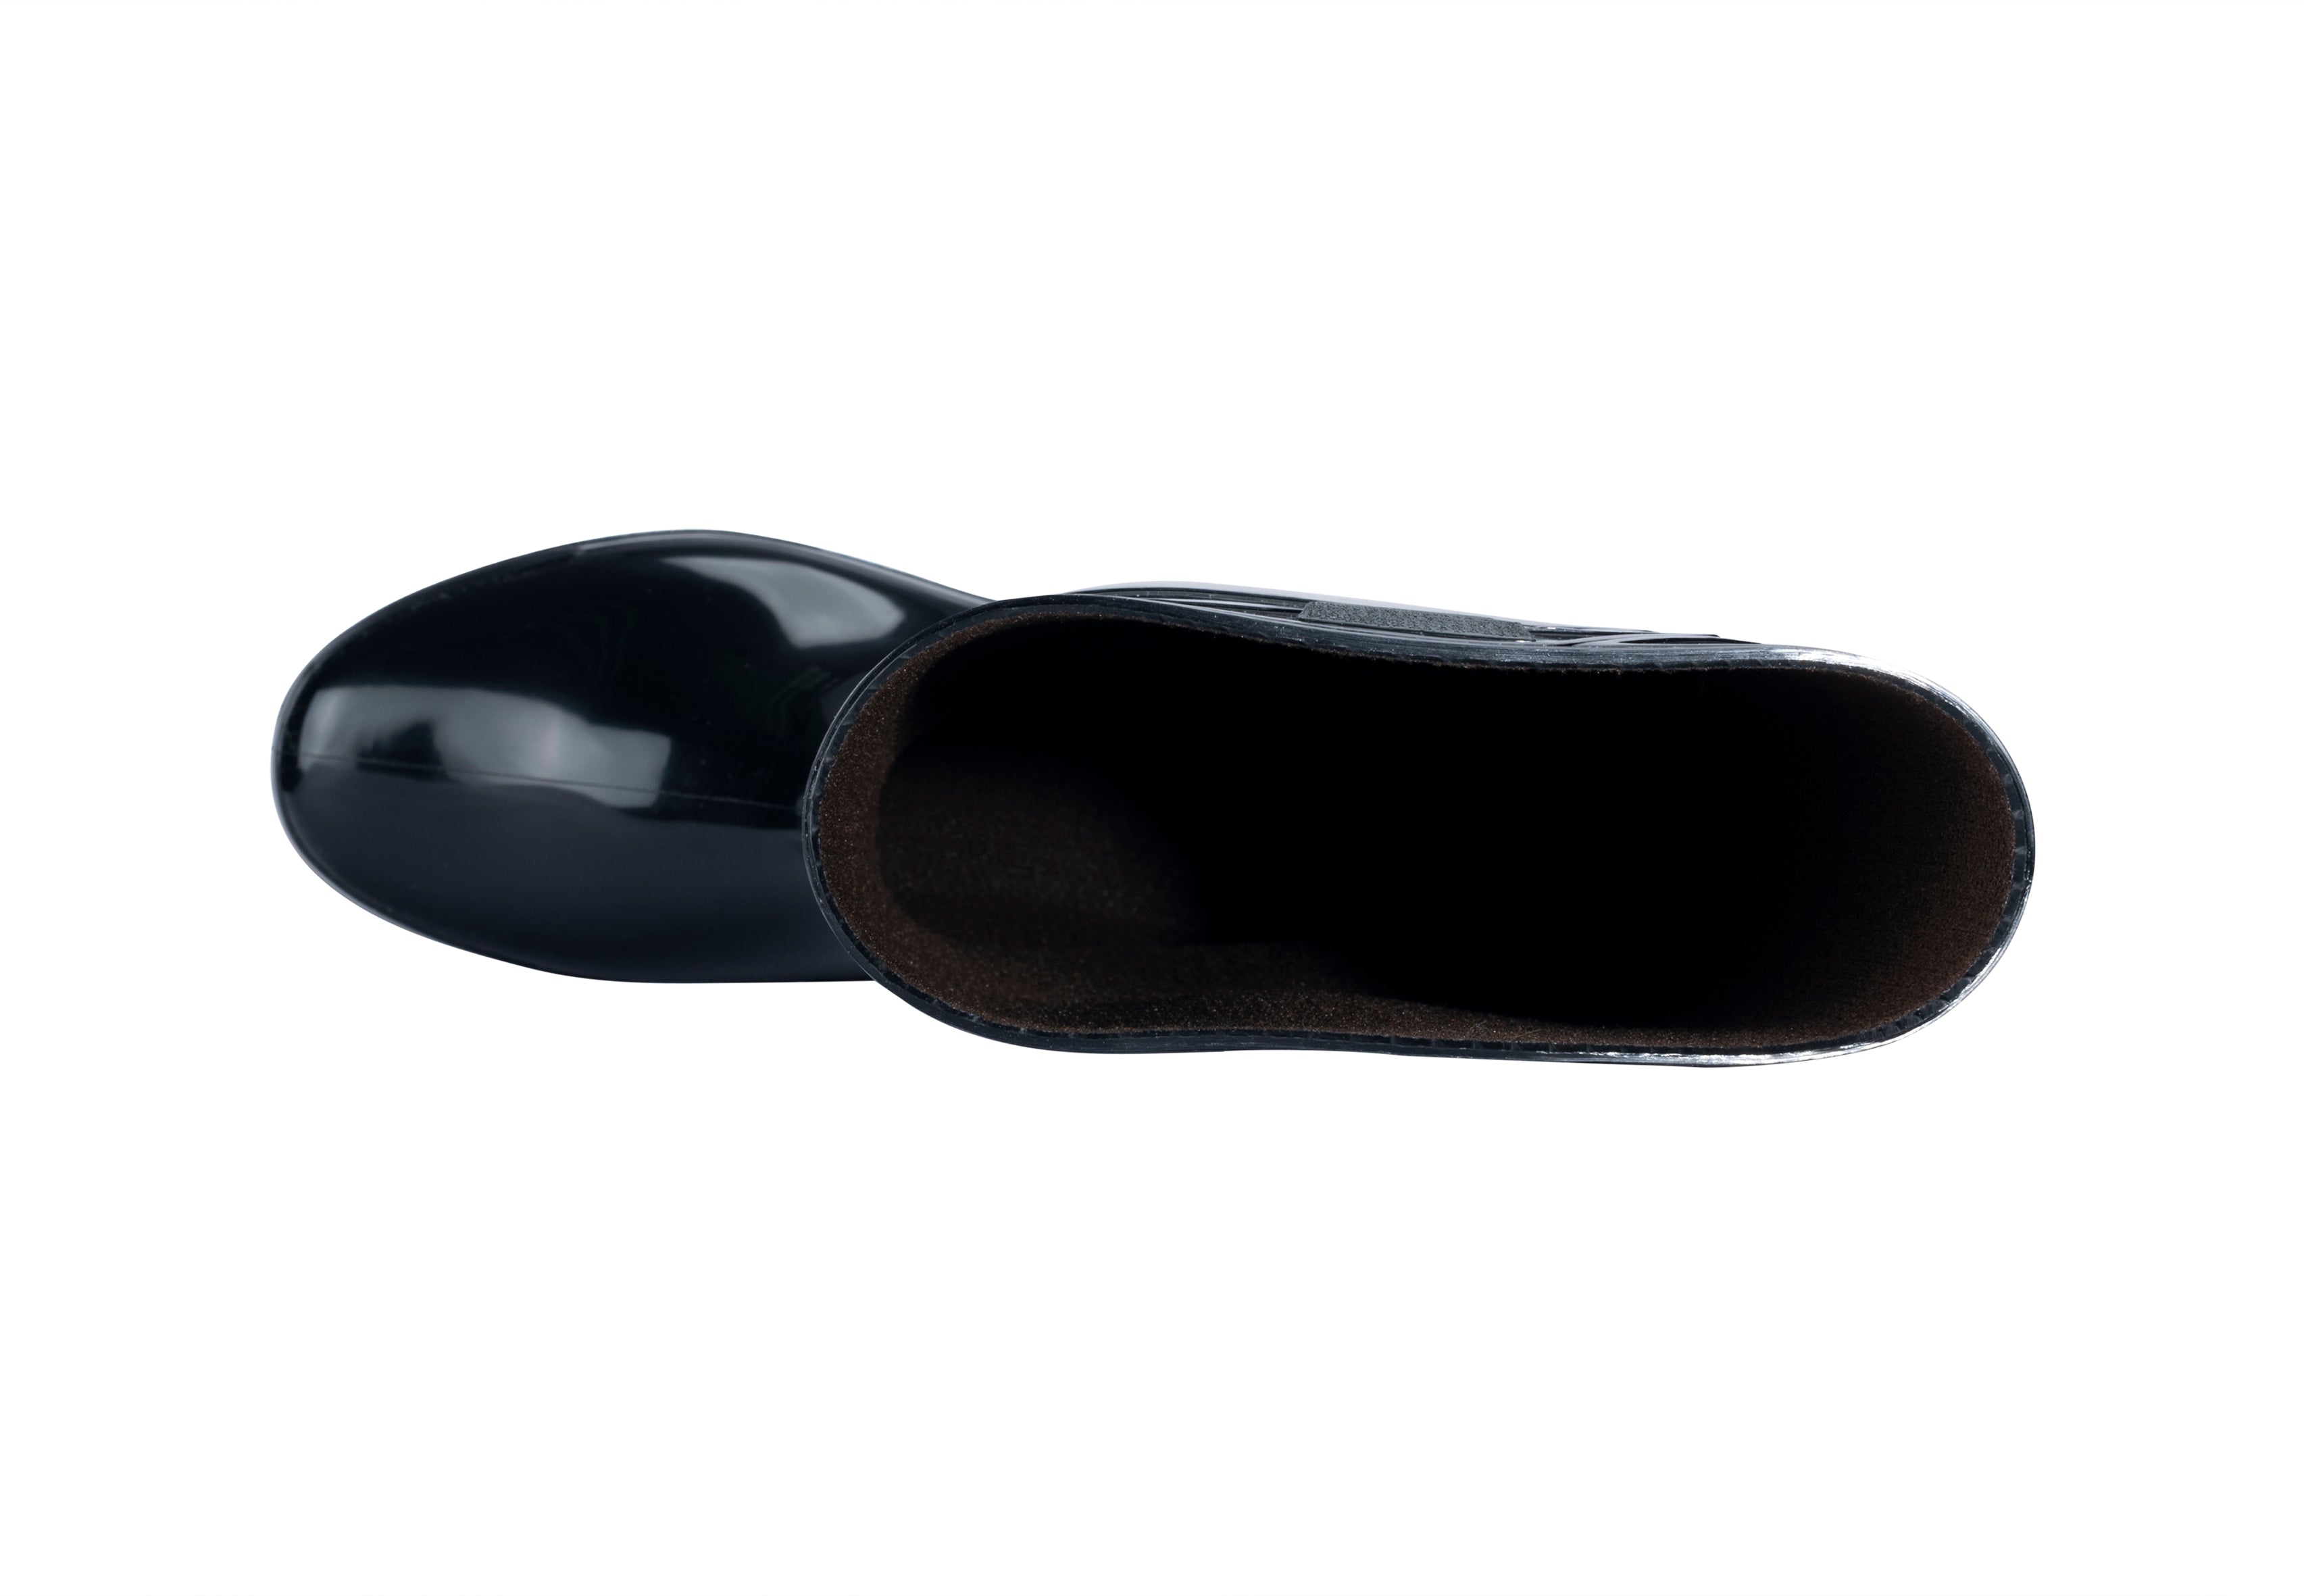 ZACTAS Z01 Extra High 40cm Rain Boots (Top Sales in Japan)-ZONA (KOHSHIN)-BK-JP/TW Size-1: 240-偉豐鞋 WELL SHOE HK-Well Shoe-偉豐鞋-偉豐網-荃灣鞋店-Functional shoes-Hong Kong Tsuen Wan Shoe Store-Tai Wan Shoe-Japan Shoe-高品質功能鞋-台灣進口鞋-日本進口鞋-High-quality shoes-鞋類配件-荃灣進口鞋-香港鞋店-優質鞋類產品-水靴-帆布鞋-廚師鞋-香港鞋品牌-Hong Kong Shoes brand-長者鞋-Hong Kong Rain Boots-Kitchen shoes-Cruthes-Slipper-Well Shoe Hong Kong-Anello-Arriba-休閒鞋-舒適鞋-健康鞋-皮鞋-Healthy shoes-Leather shoes-Hiking shoes